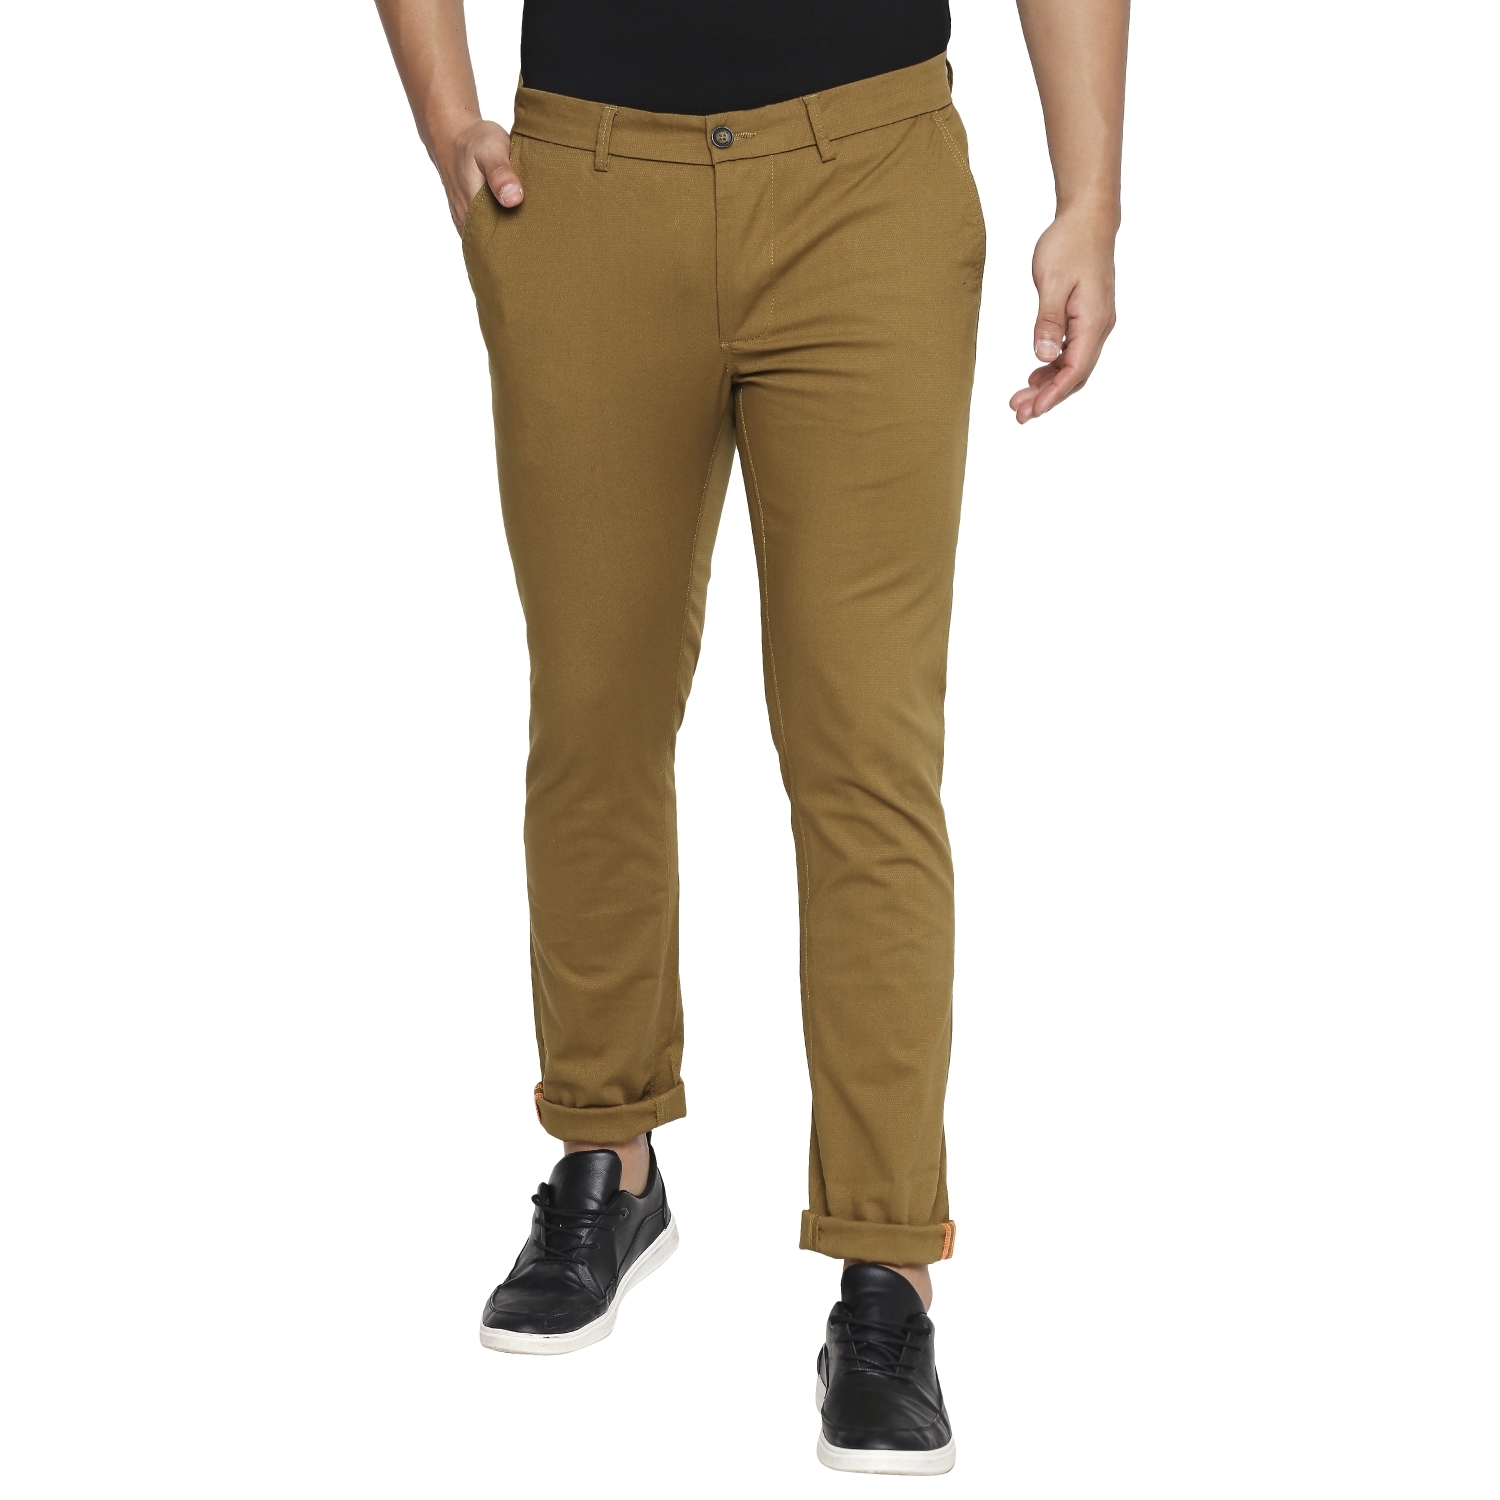 Basics | Basics Tapered Fit Bistre Khaki Stretch Trouser